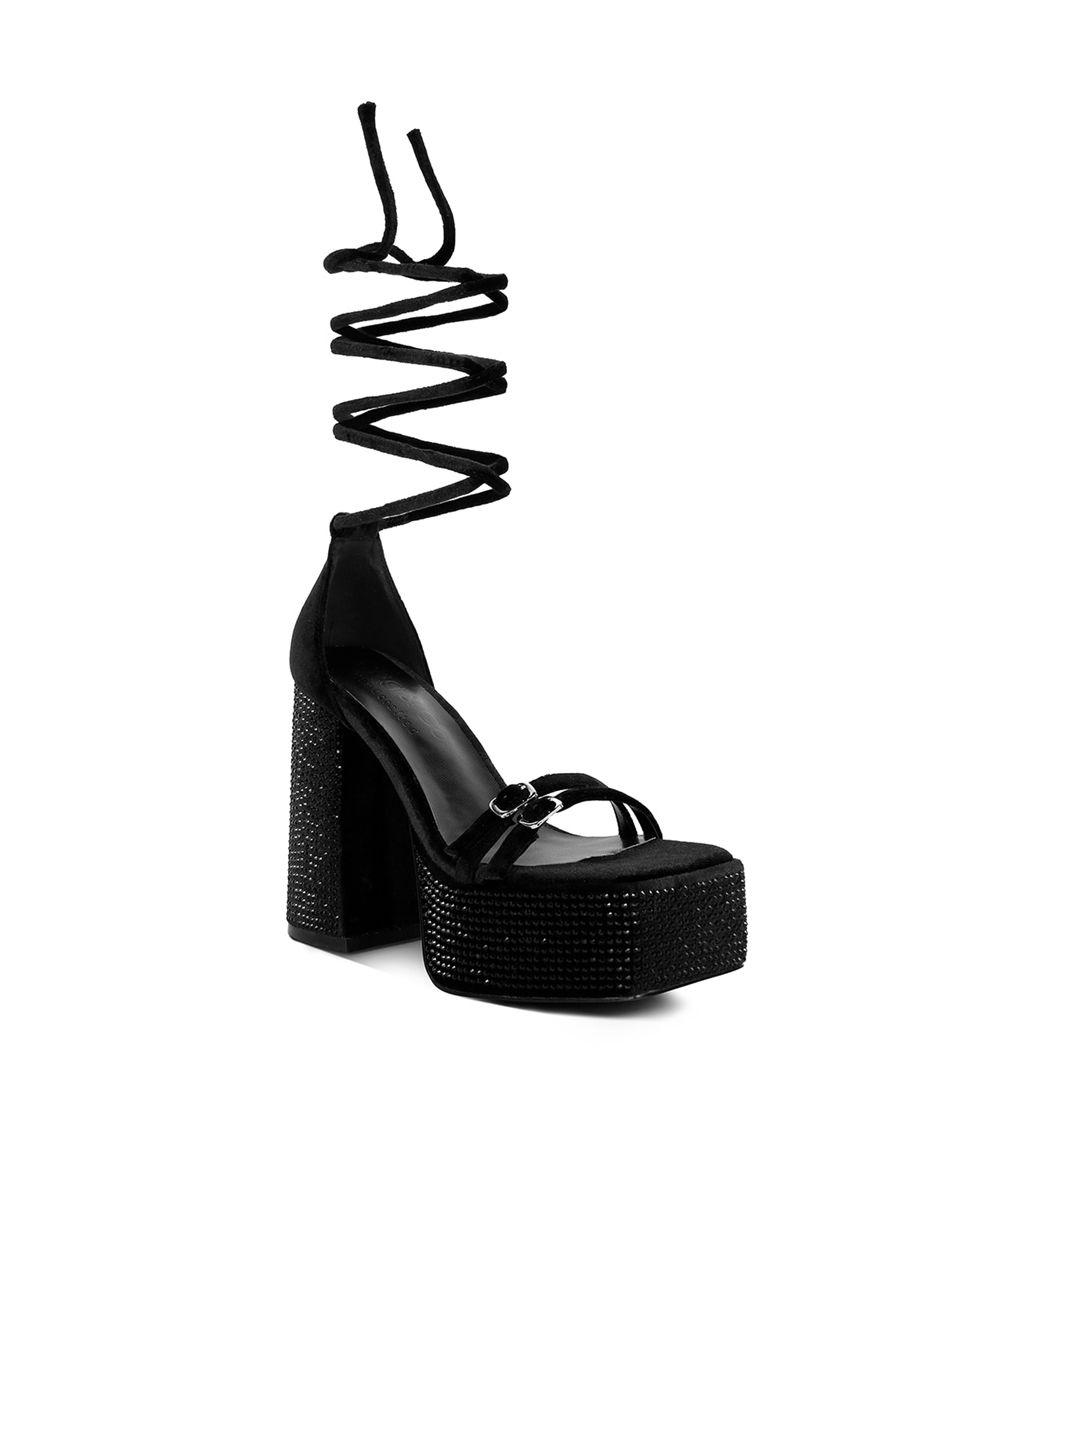 rag-&-co-open-toe-lace-ups-platform-heels